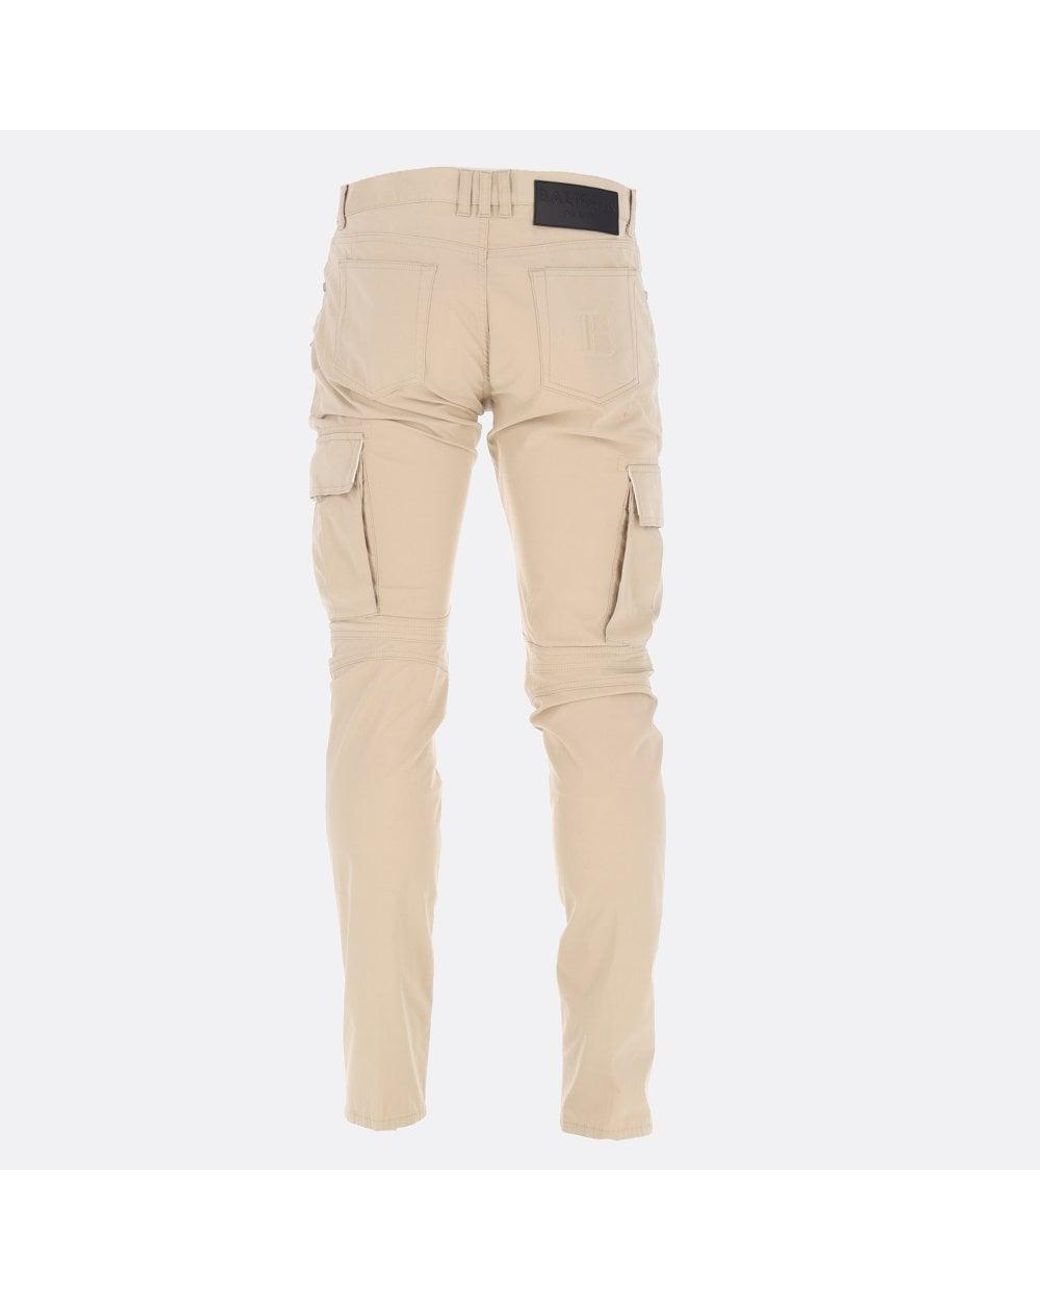 PROmo jeans : Motorcycle Cargo Pants SANTIAGO [PMJ28SAN-BK]